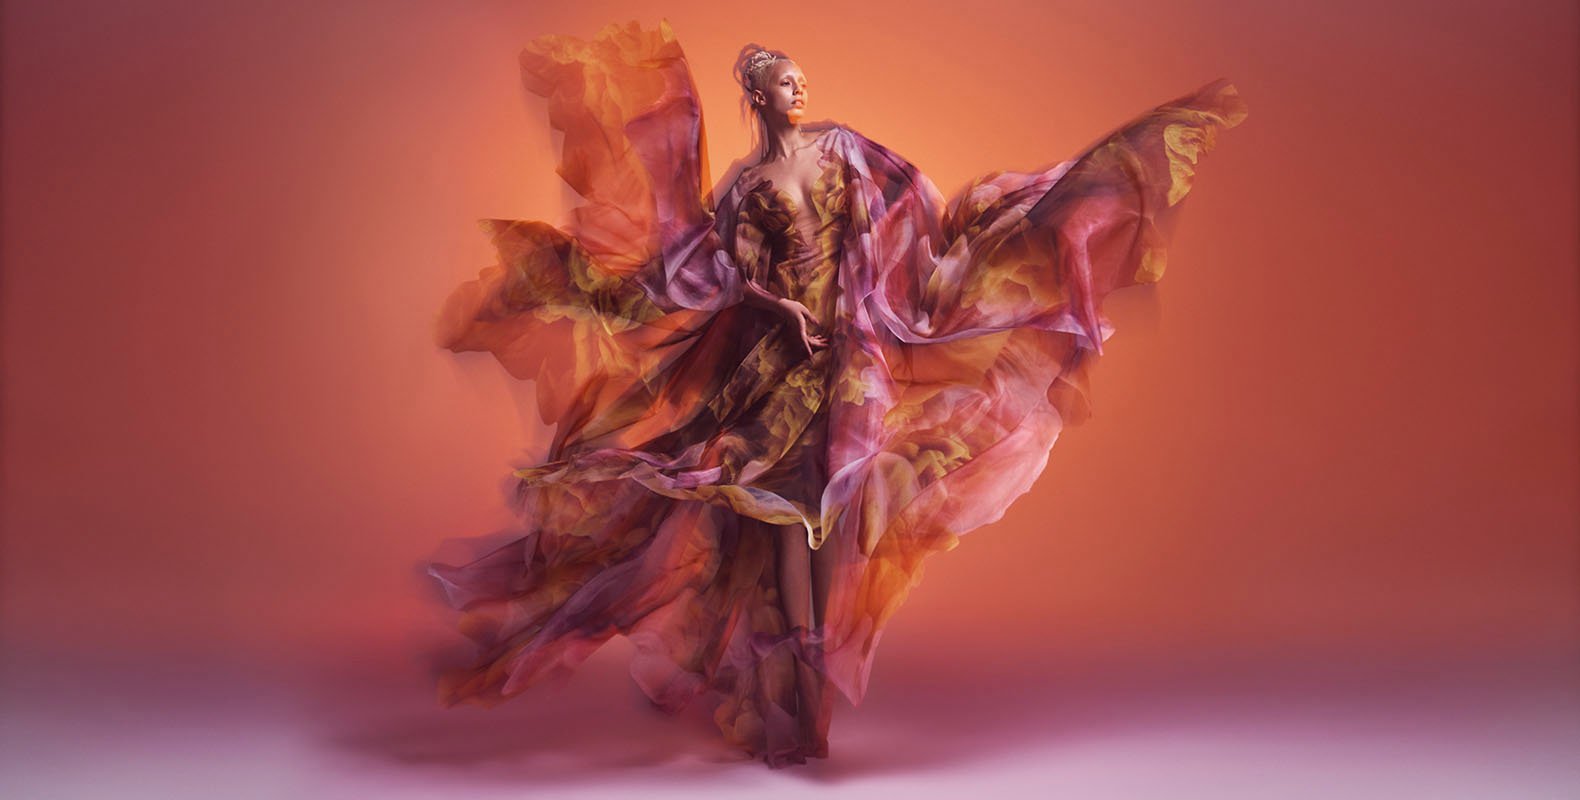  ”Iris van Herpen. Sculpting the Senses,” Cosmica Dress, in collaboration with Kim Keever (print) Shift Souls Collection 2019   Photo courtesy Musée des Arts Décoratifs © MAD Paris  